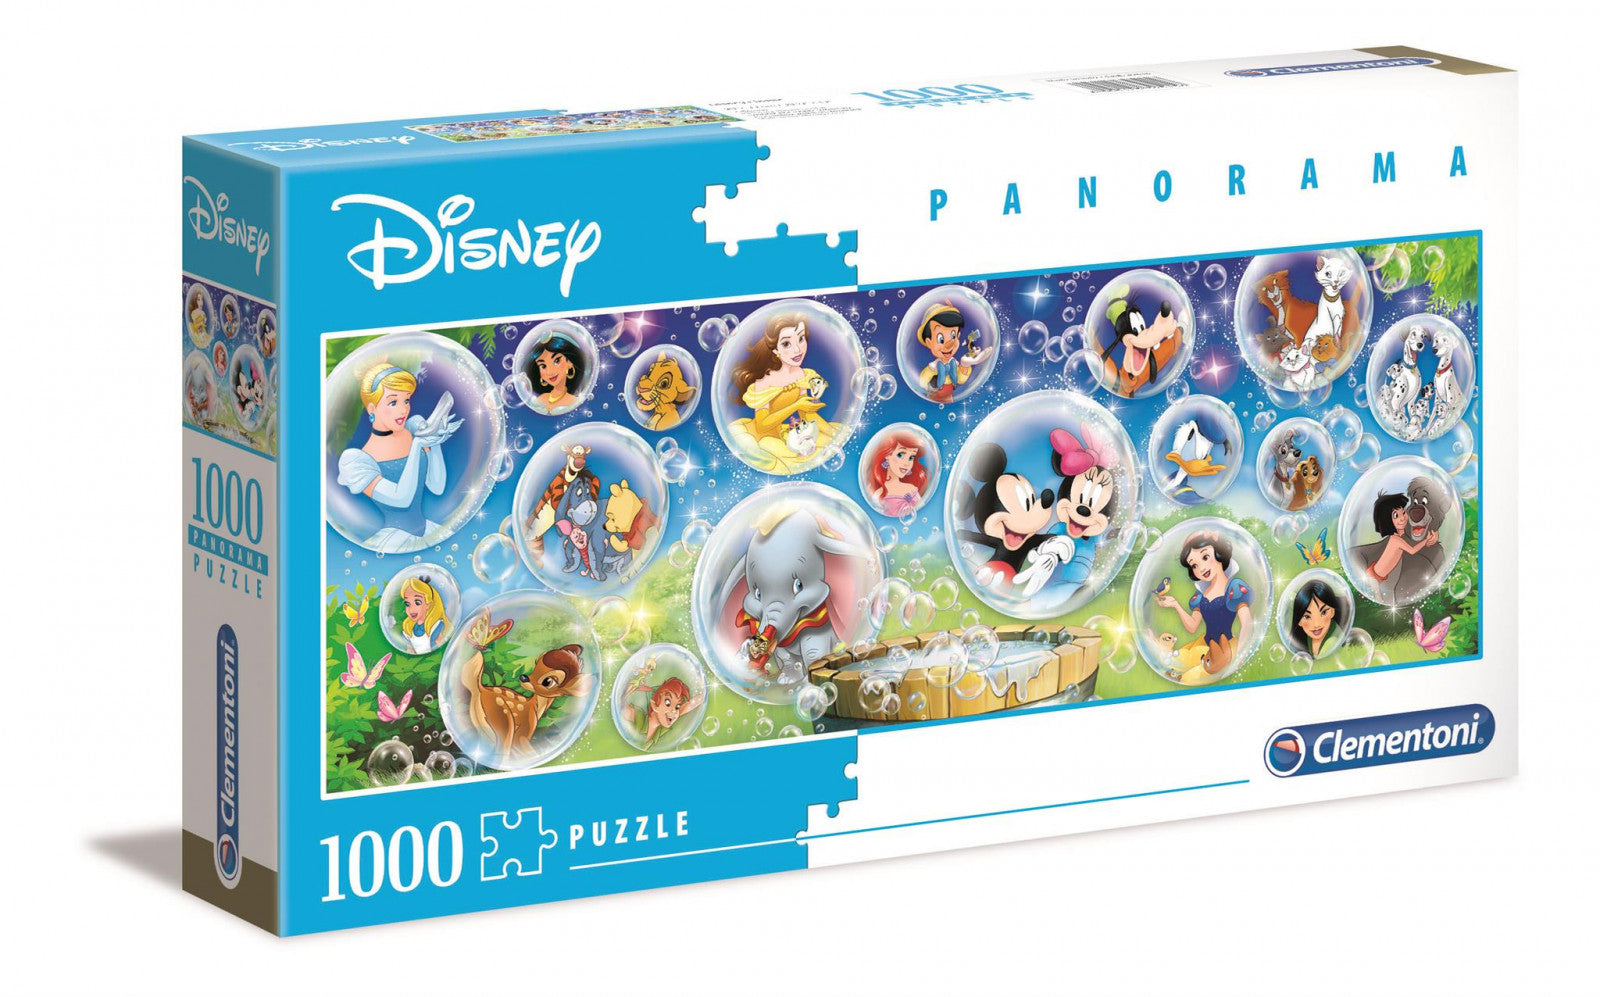 Disney Classic Panorama - Clementoni 1000pce